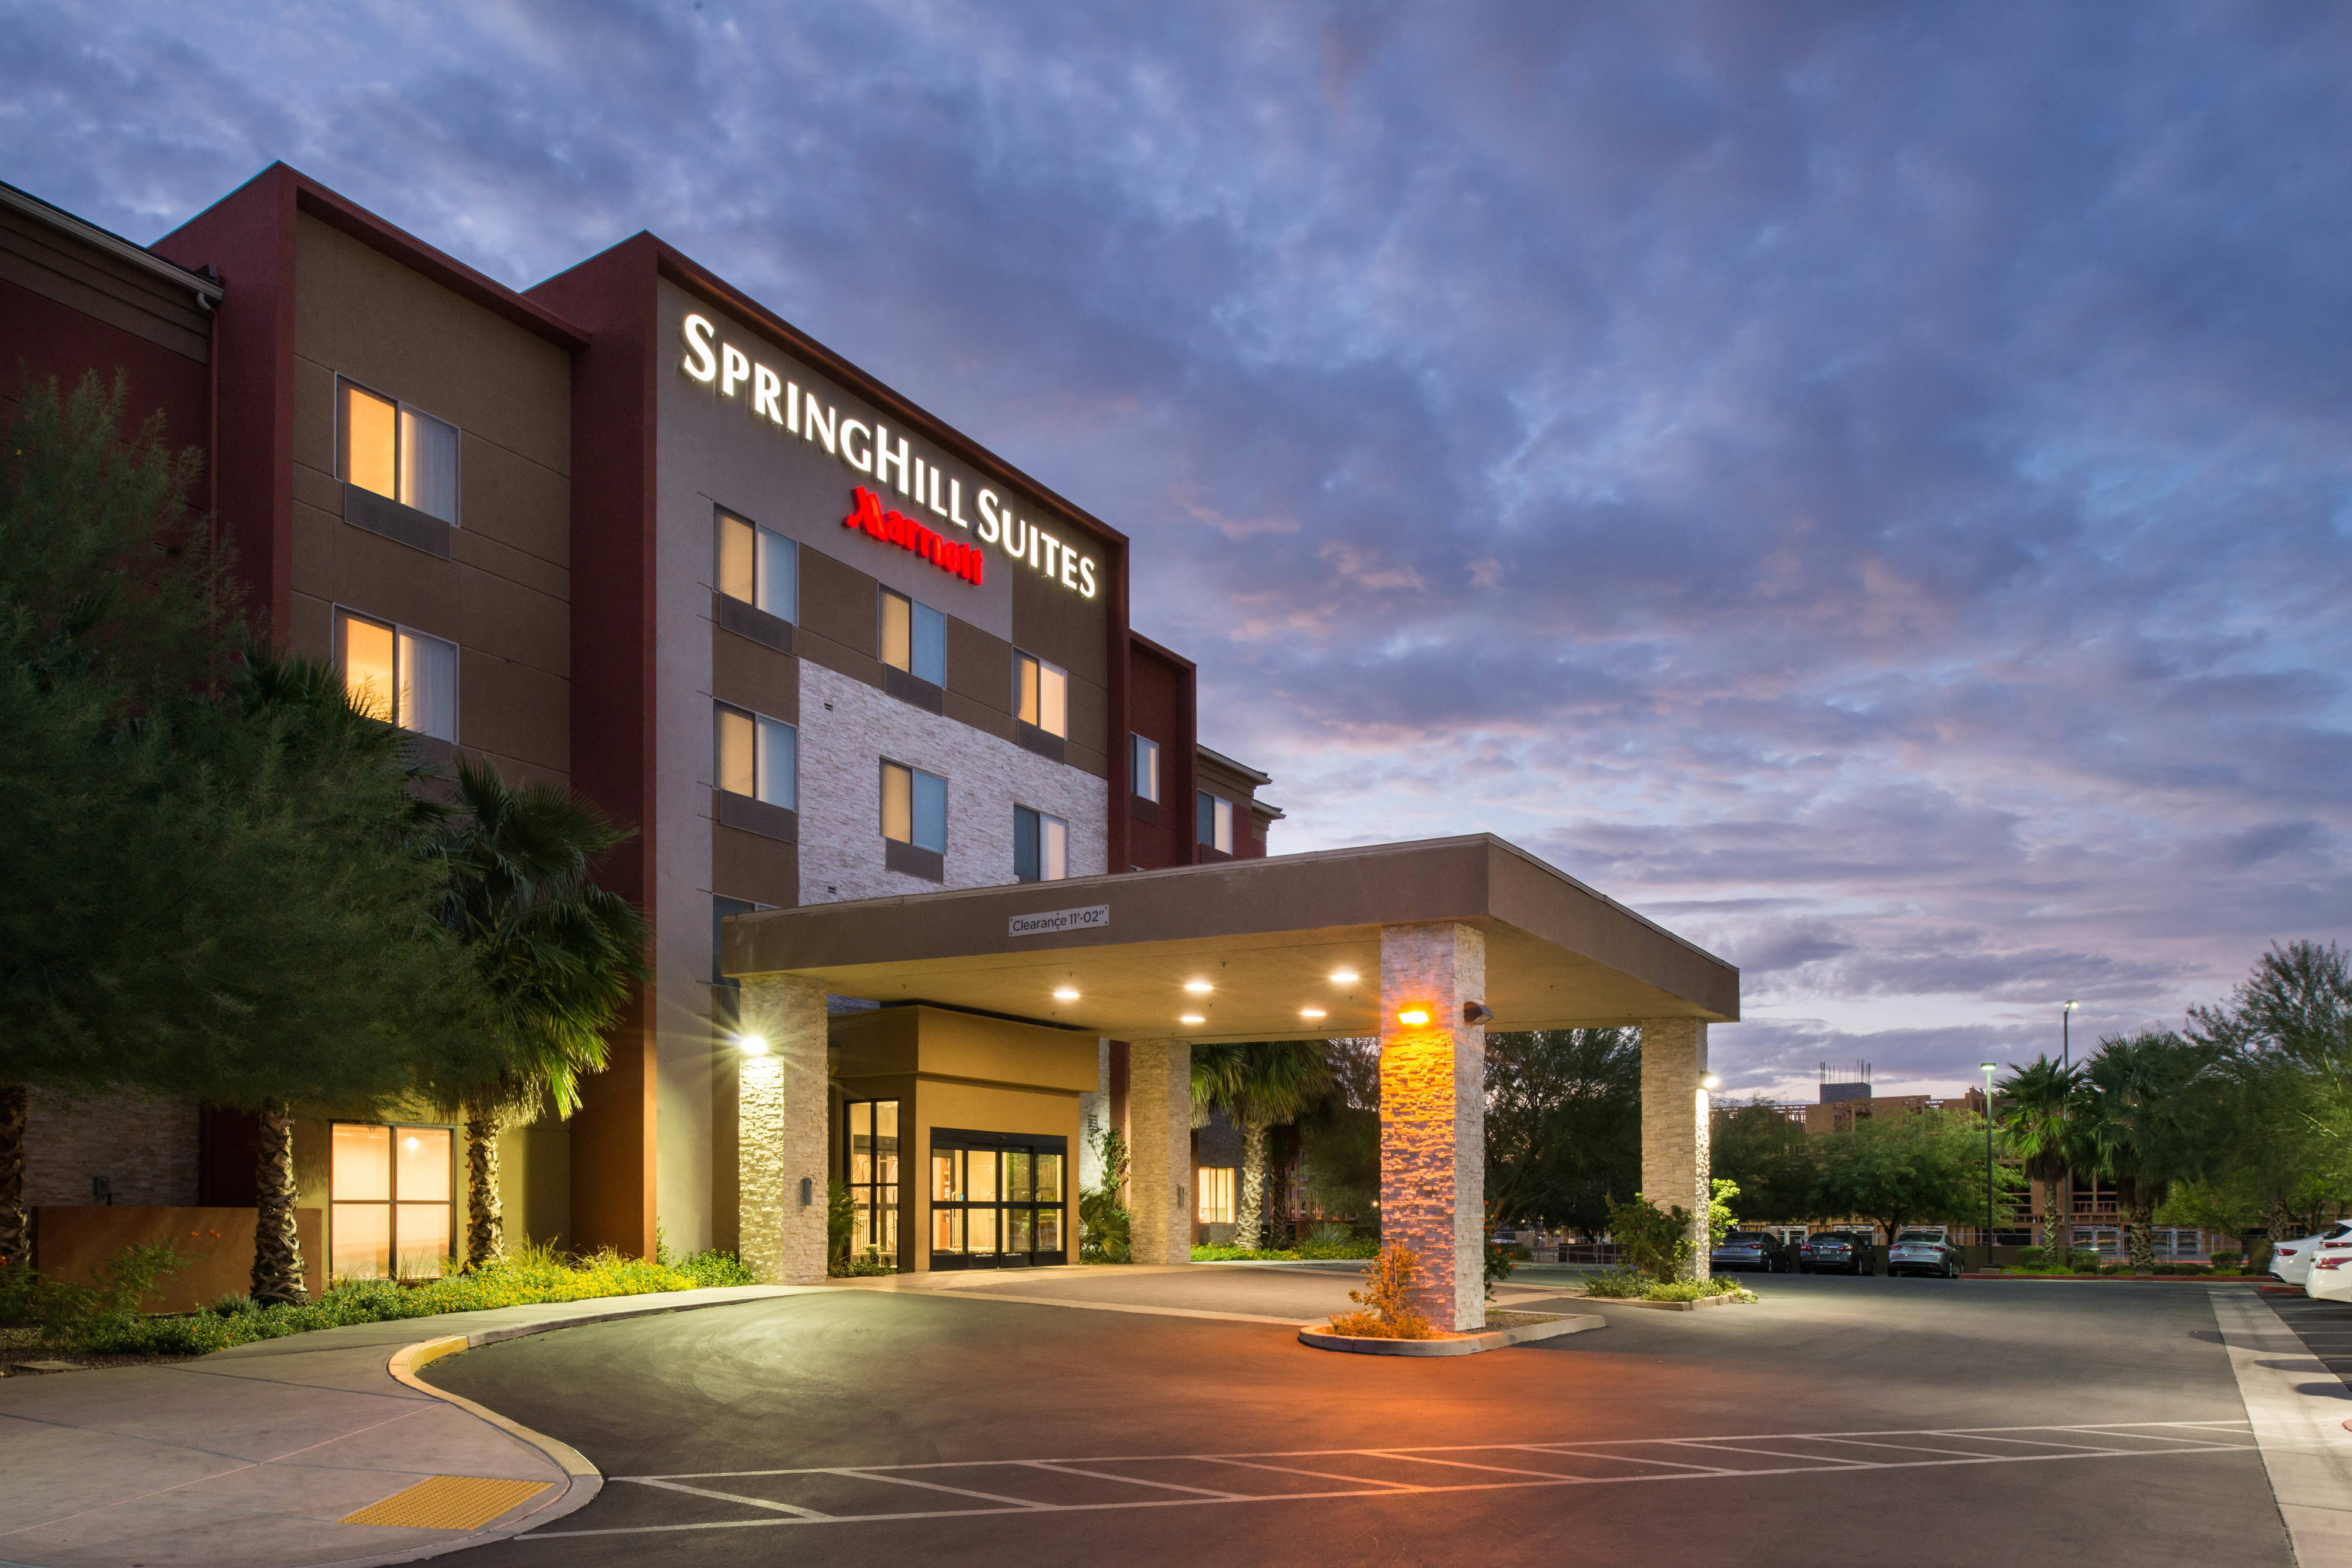 Photo of SpringHill Suites Las Vegas Henderson, Henderson, NV